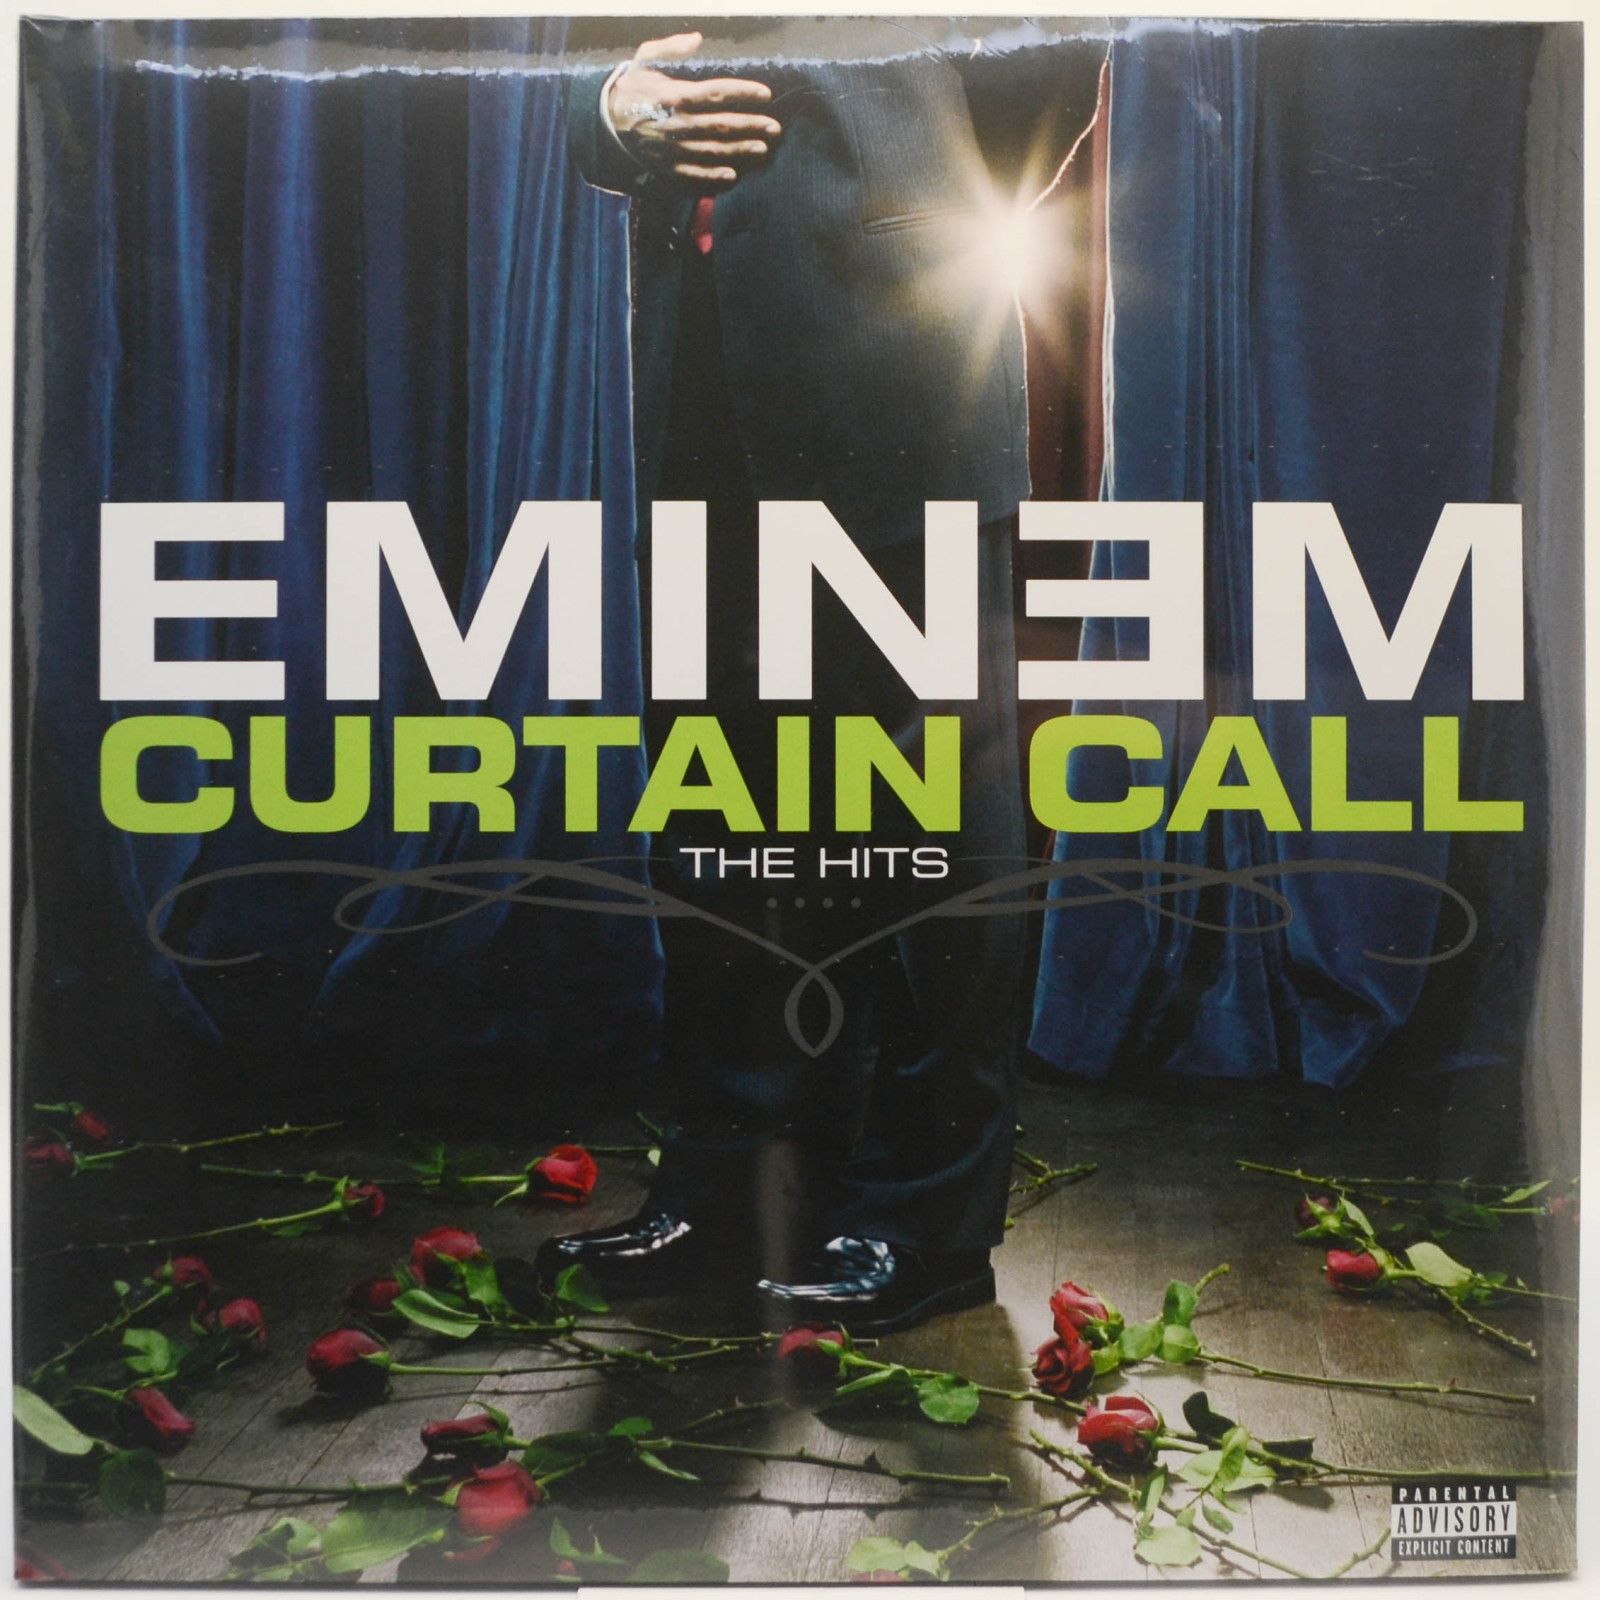 Eminem curtain call. Eminem Curtain Call обложка. Eminem 2022. Эминем сейчас 2022. Curtain Call Challenge.